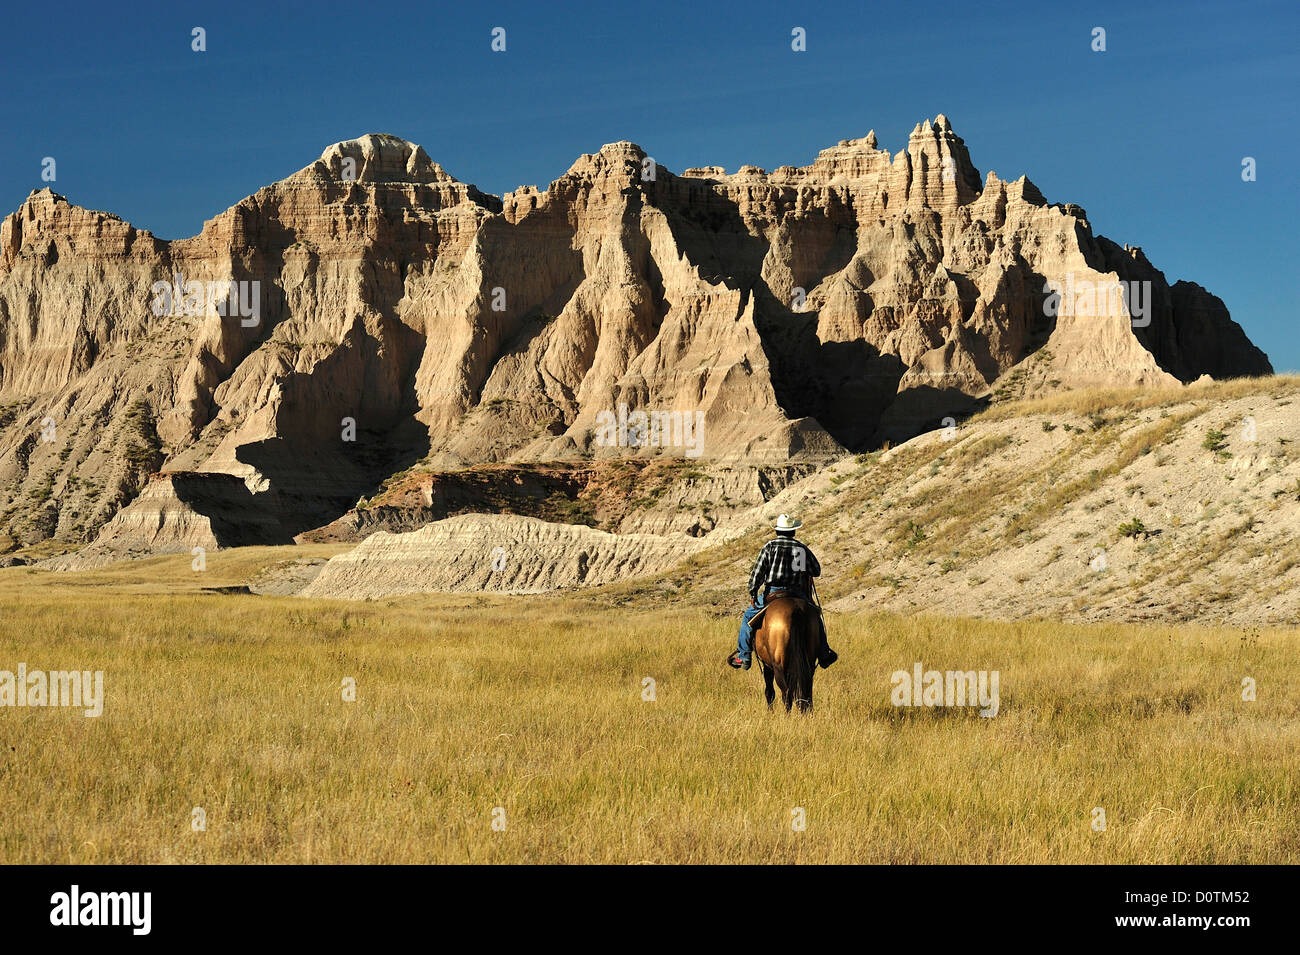 American Indian, cavallo, equitazione, cowboy, badlands Lakota, Sioux, Indiana, Badlands, South Dakota, solitarie, cavaliere, West, p Foto Stock